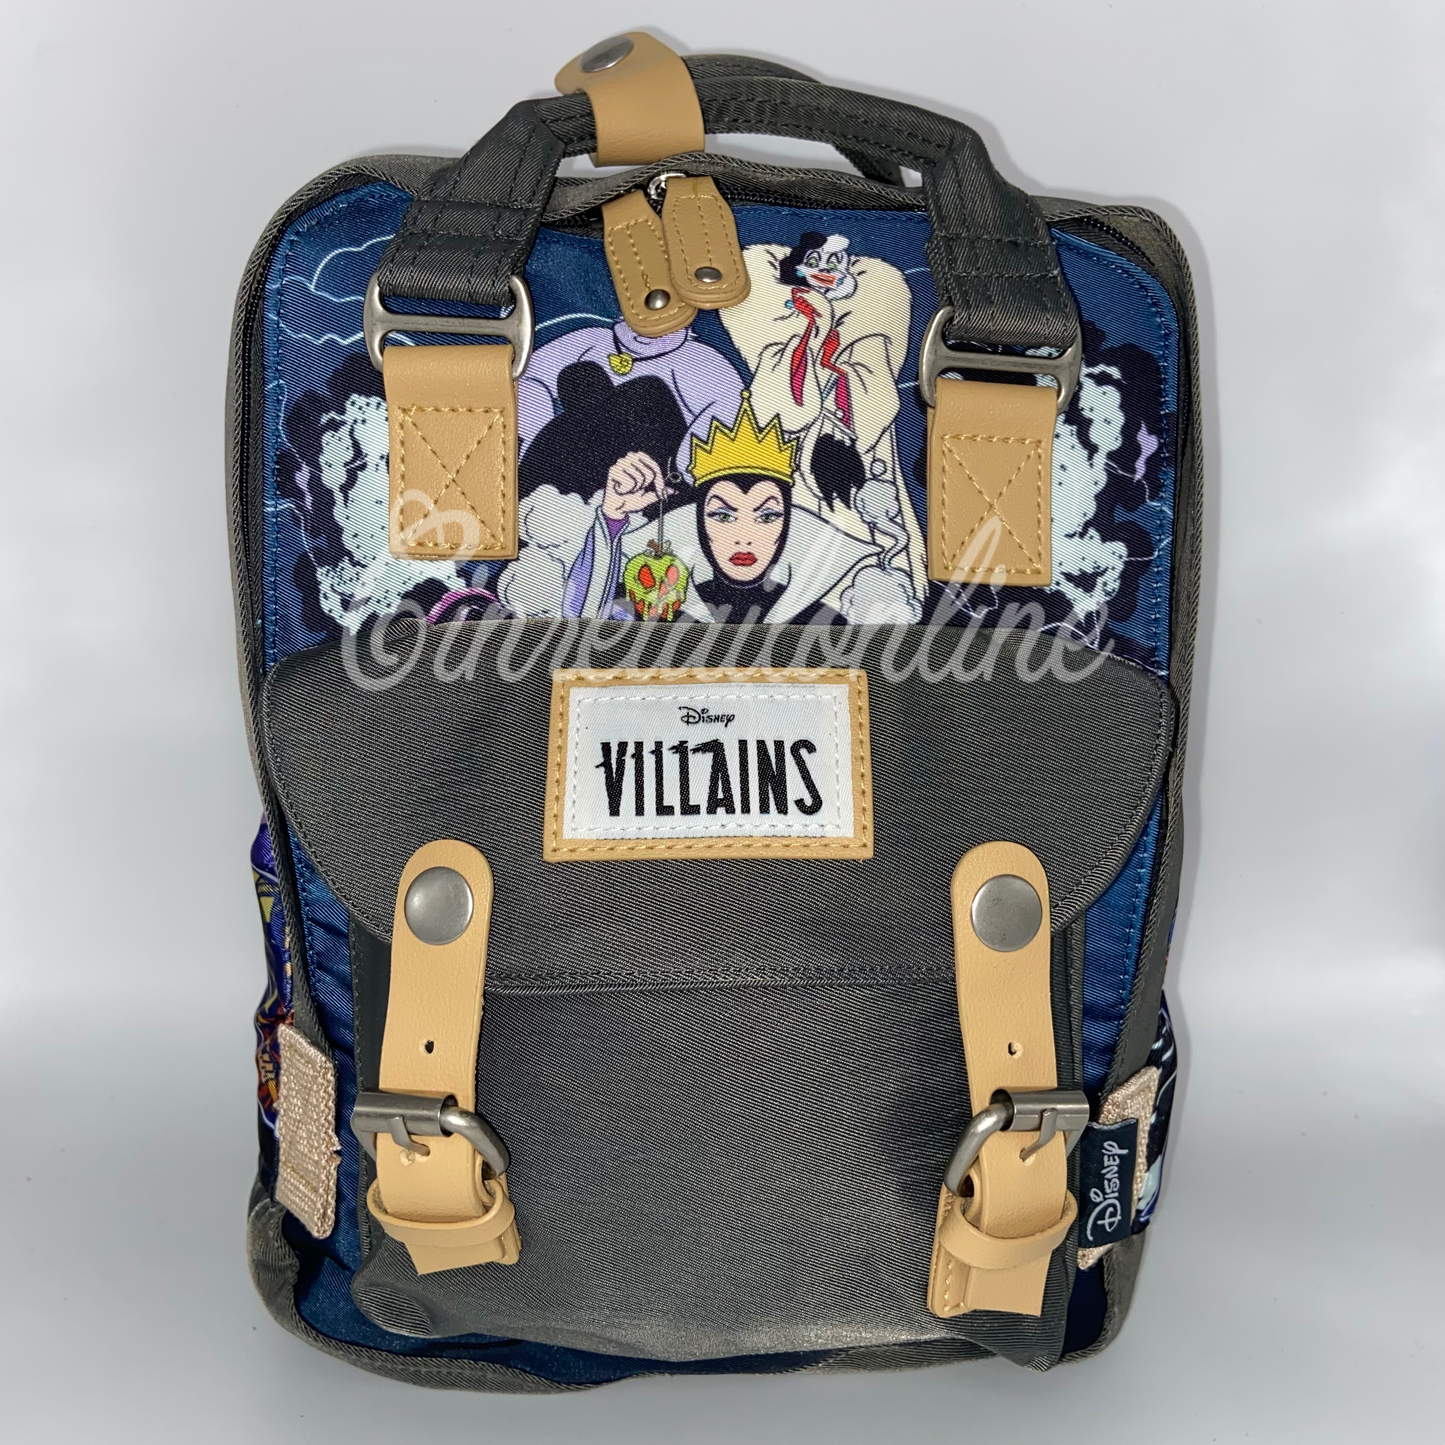 Villains mini backpack